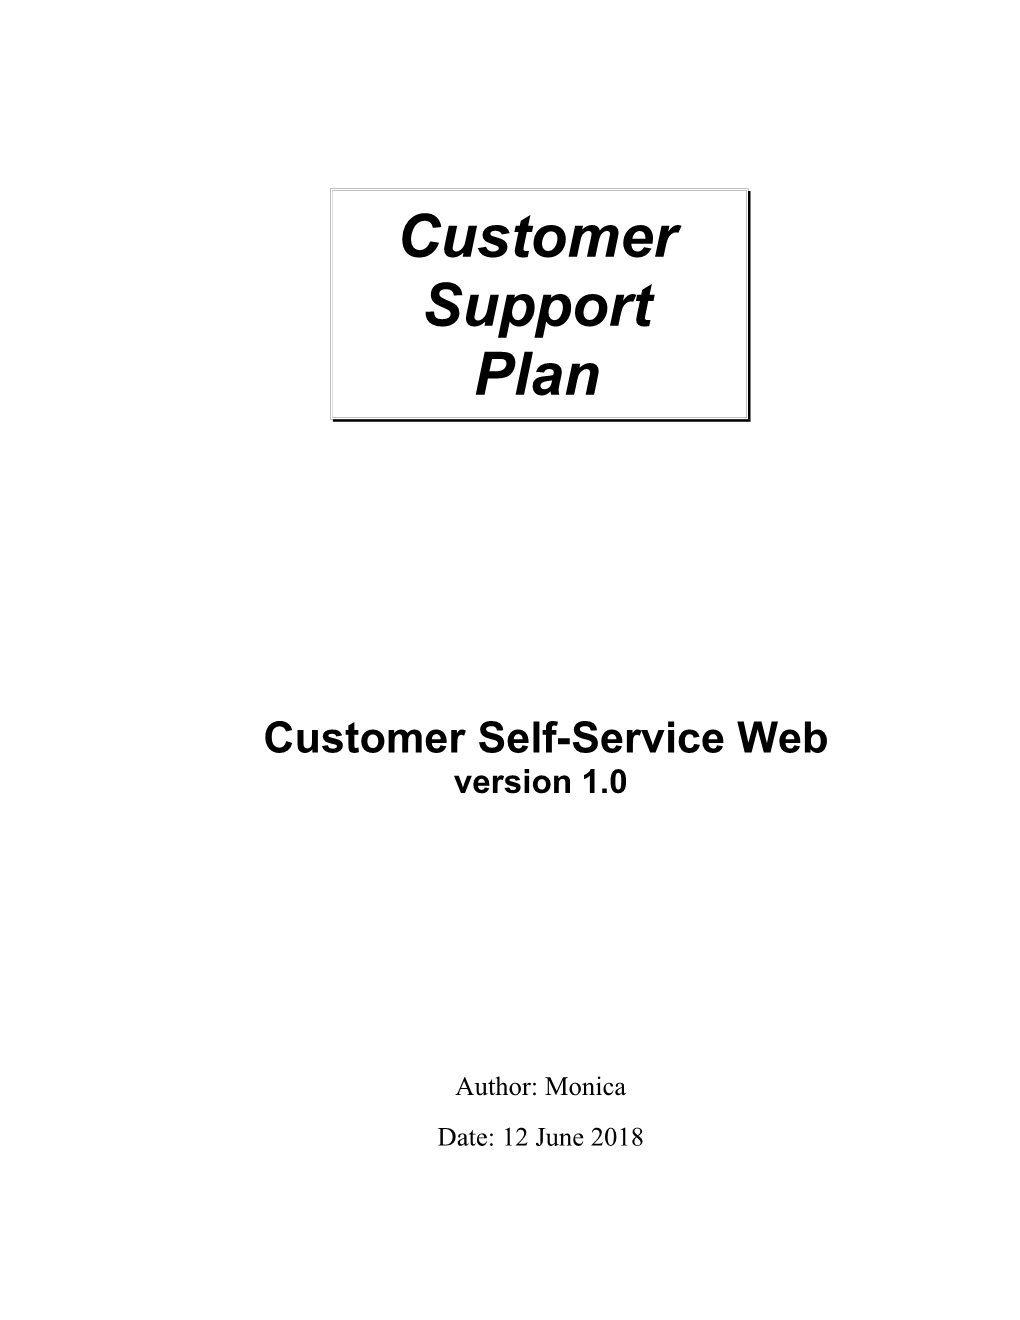 Template 11-4 Customer Support Plan